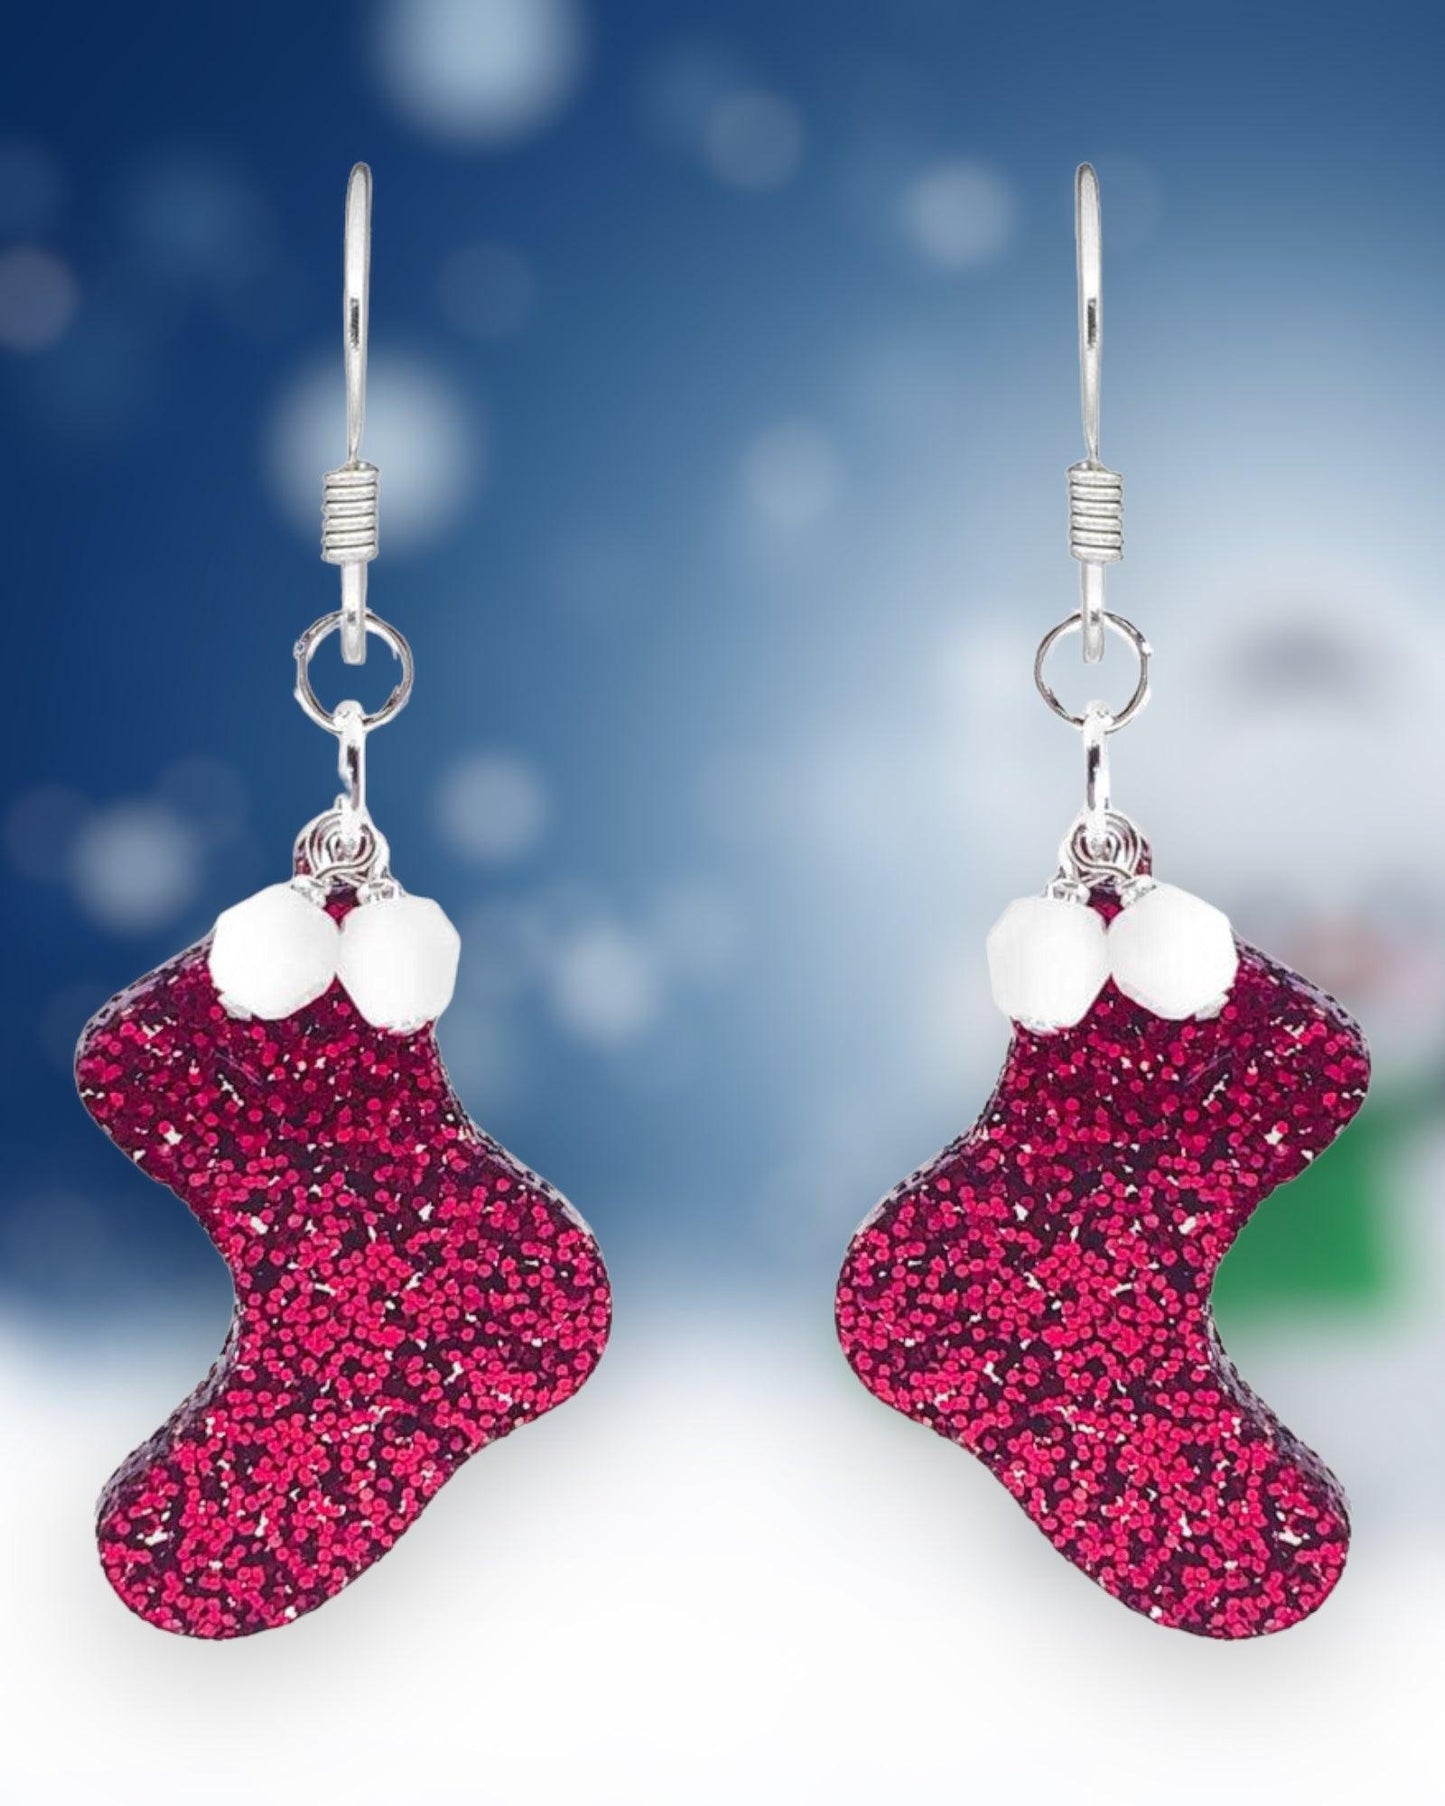 Stocking Christmas Earring Kit - Too Cute Beads